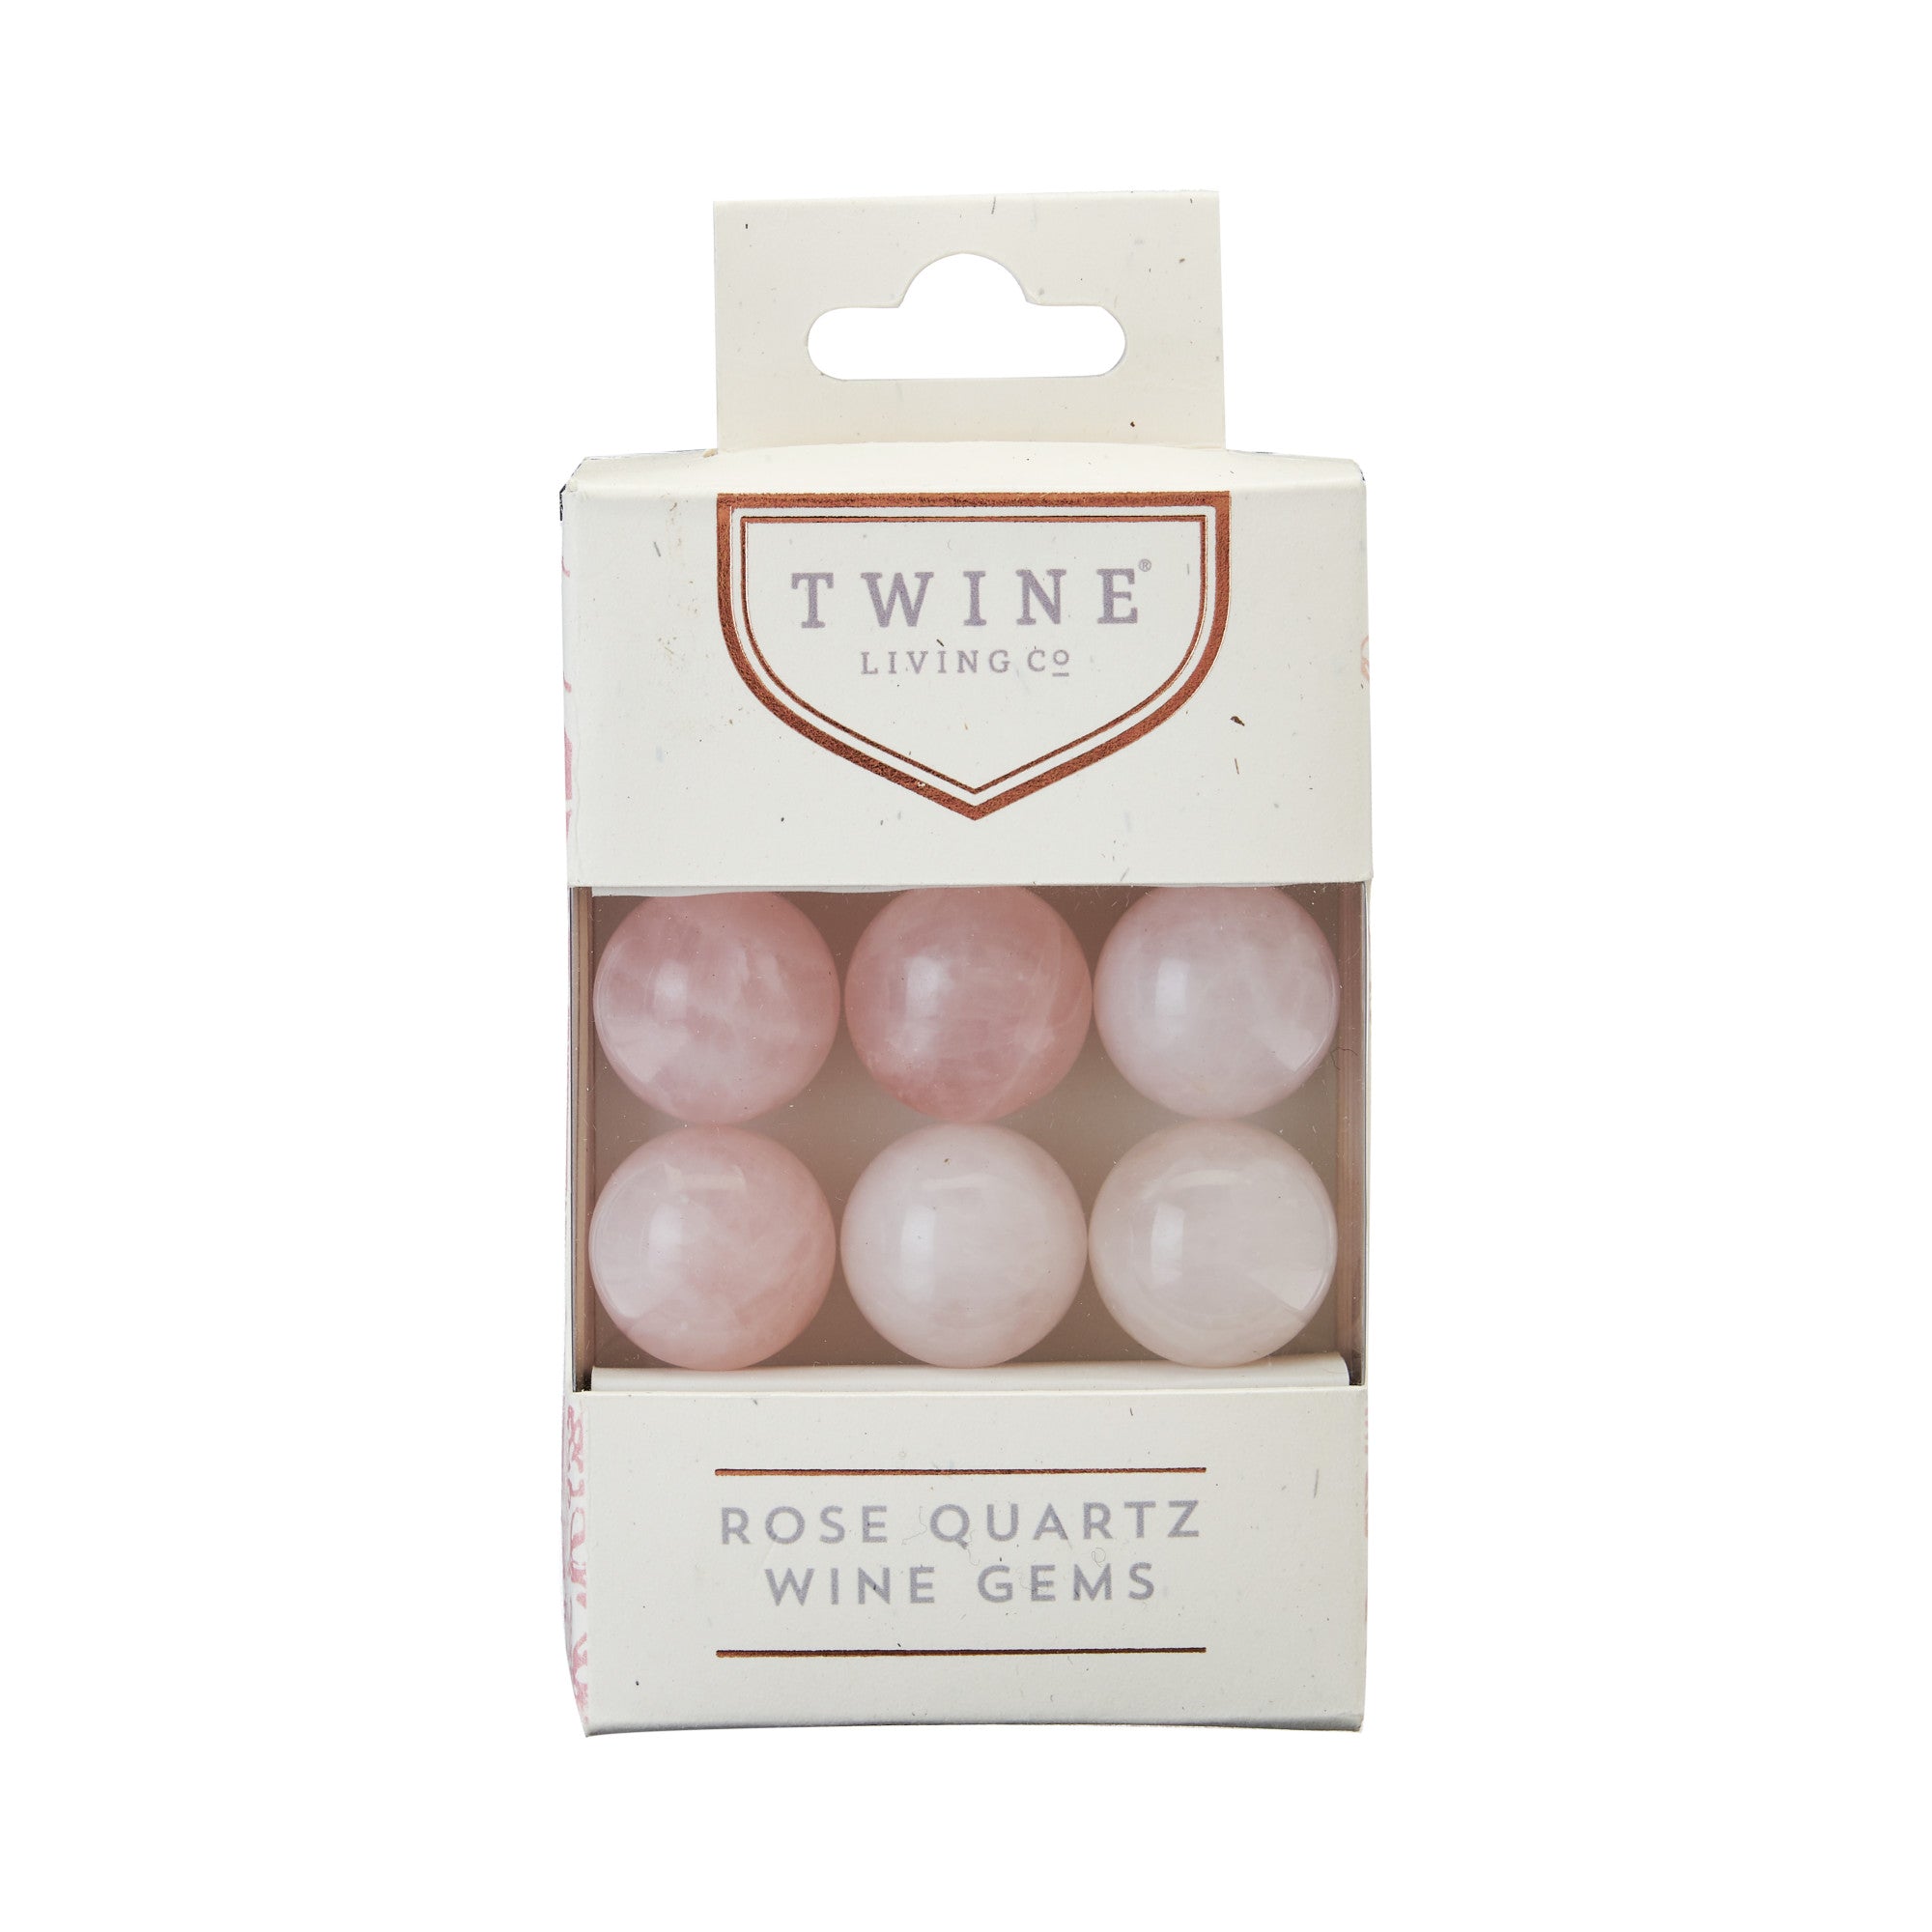 Rose Quartz Wine Gems Set of 6 by Twine?